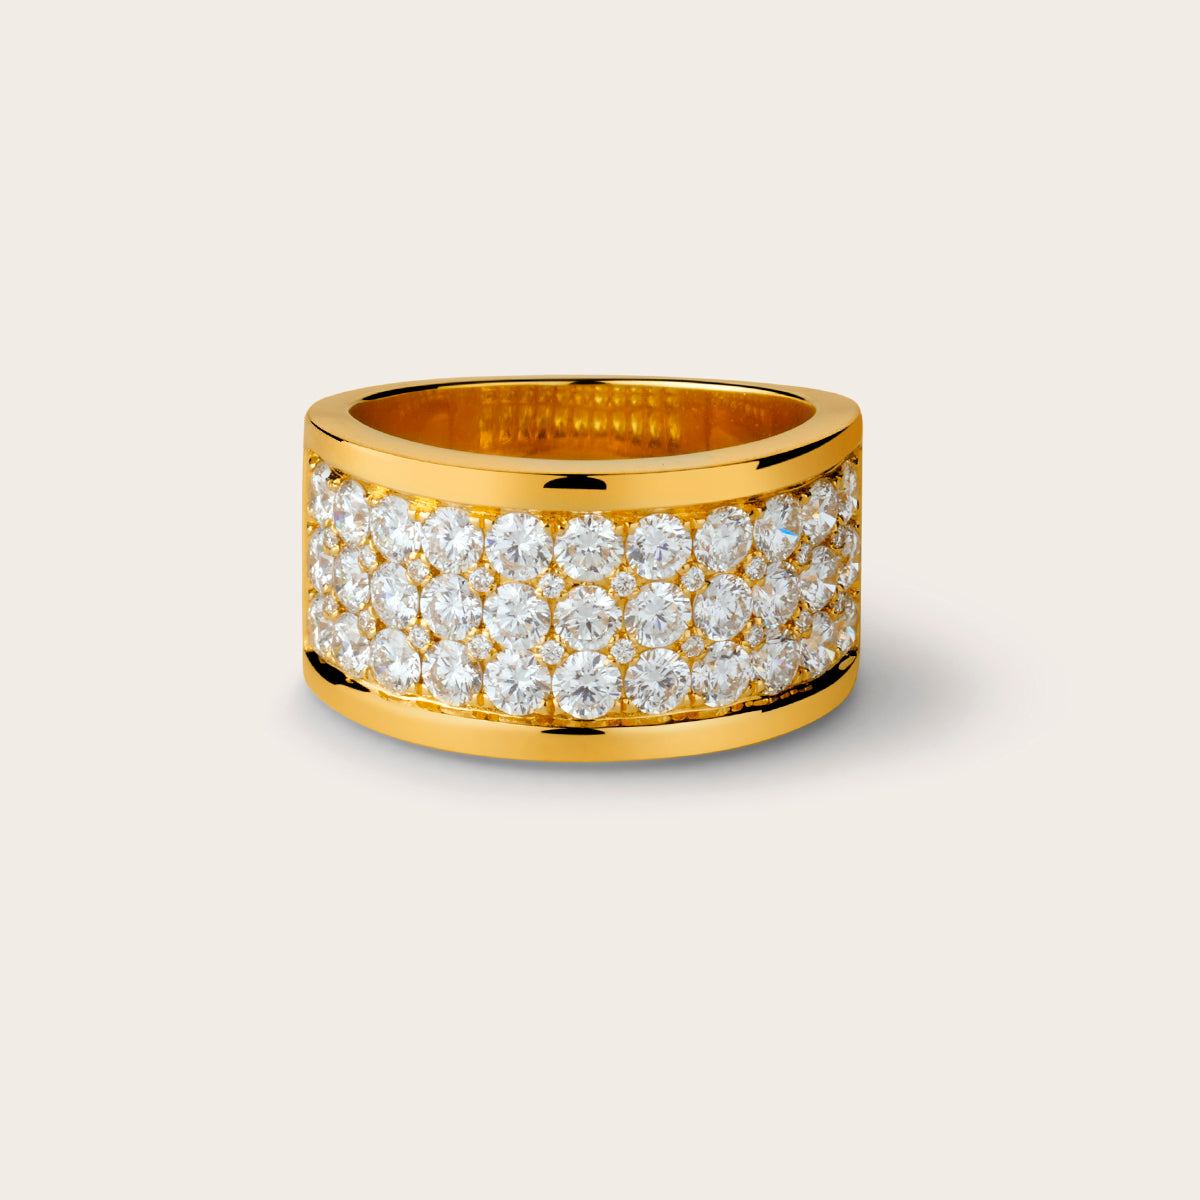 Triple Row Diamond Ring of 18kt Gold